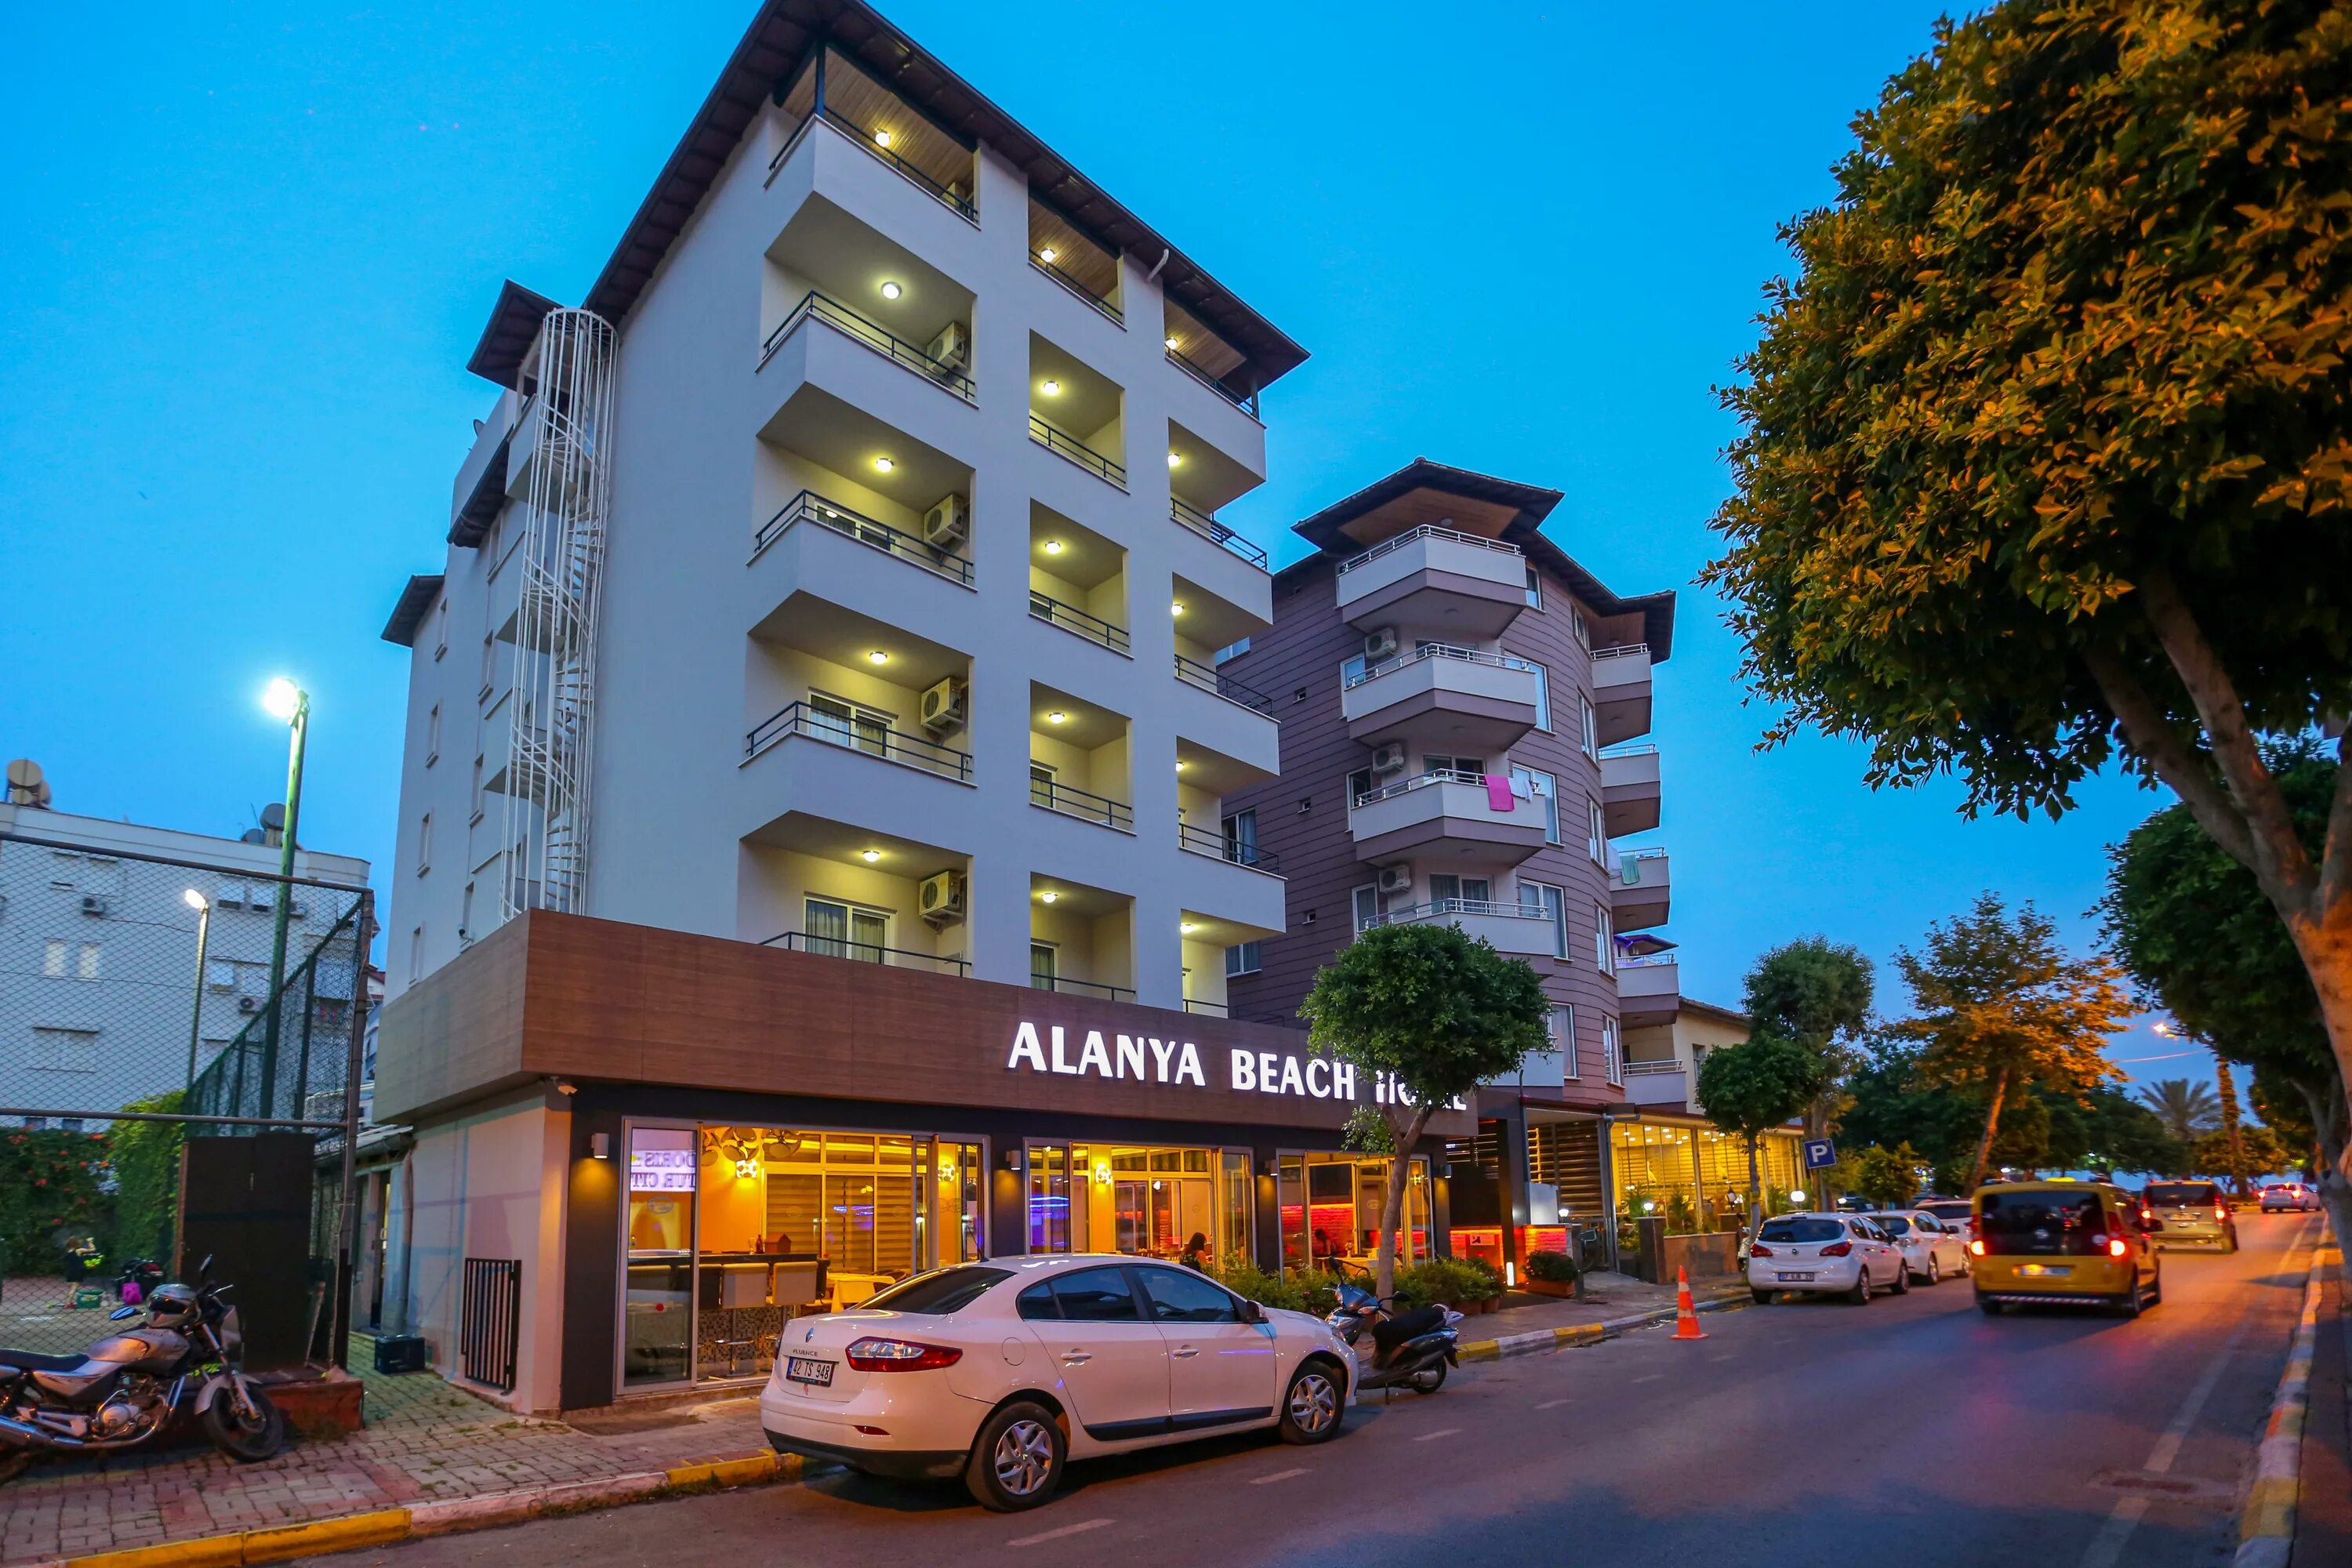 Alanya Beach Hotel. Отели в Алании Beach Hotel. Отель Холанд Алания. Alanya Beach 3 Турция.